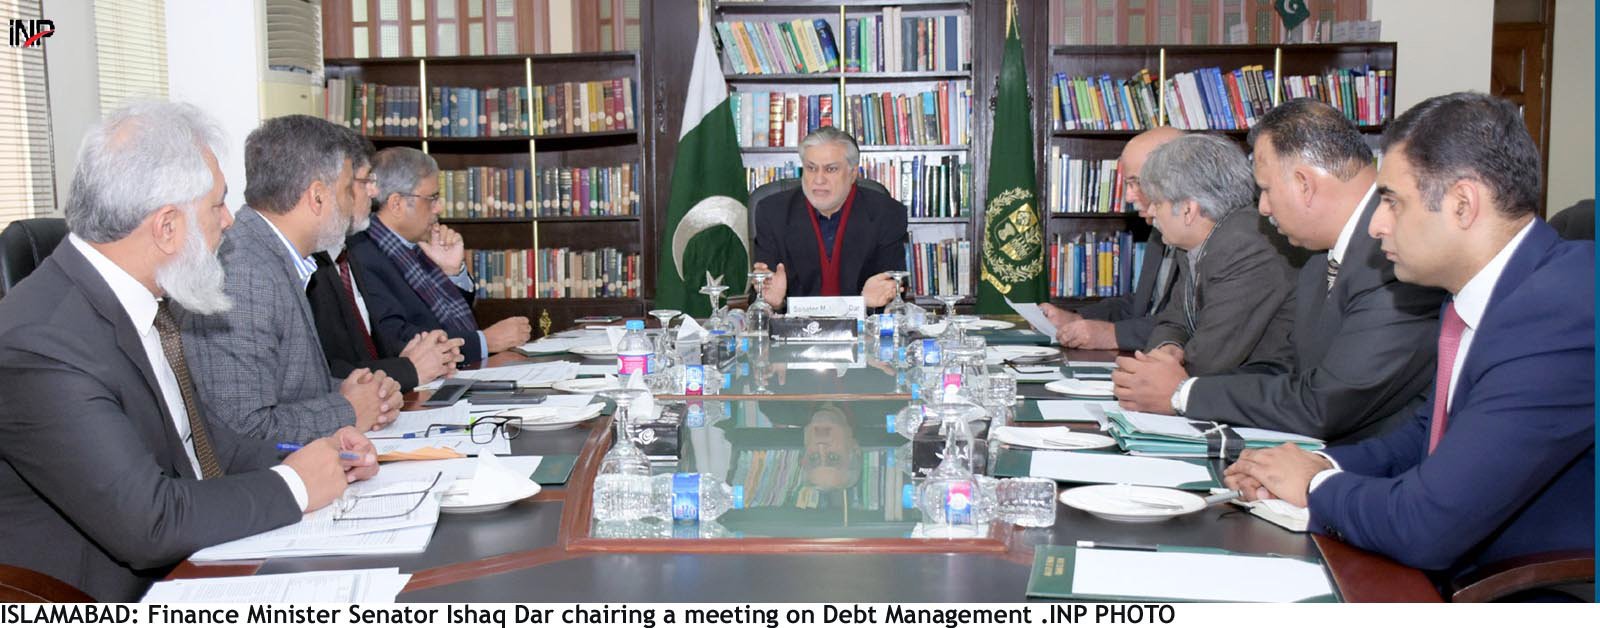 finance minister ishaq dar chairing a meeting on debt management photo inp